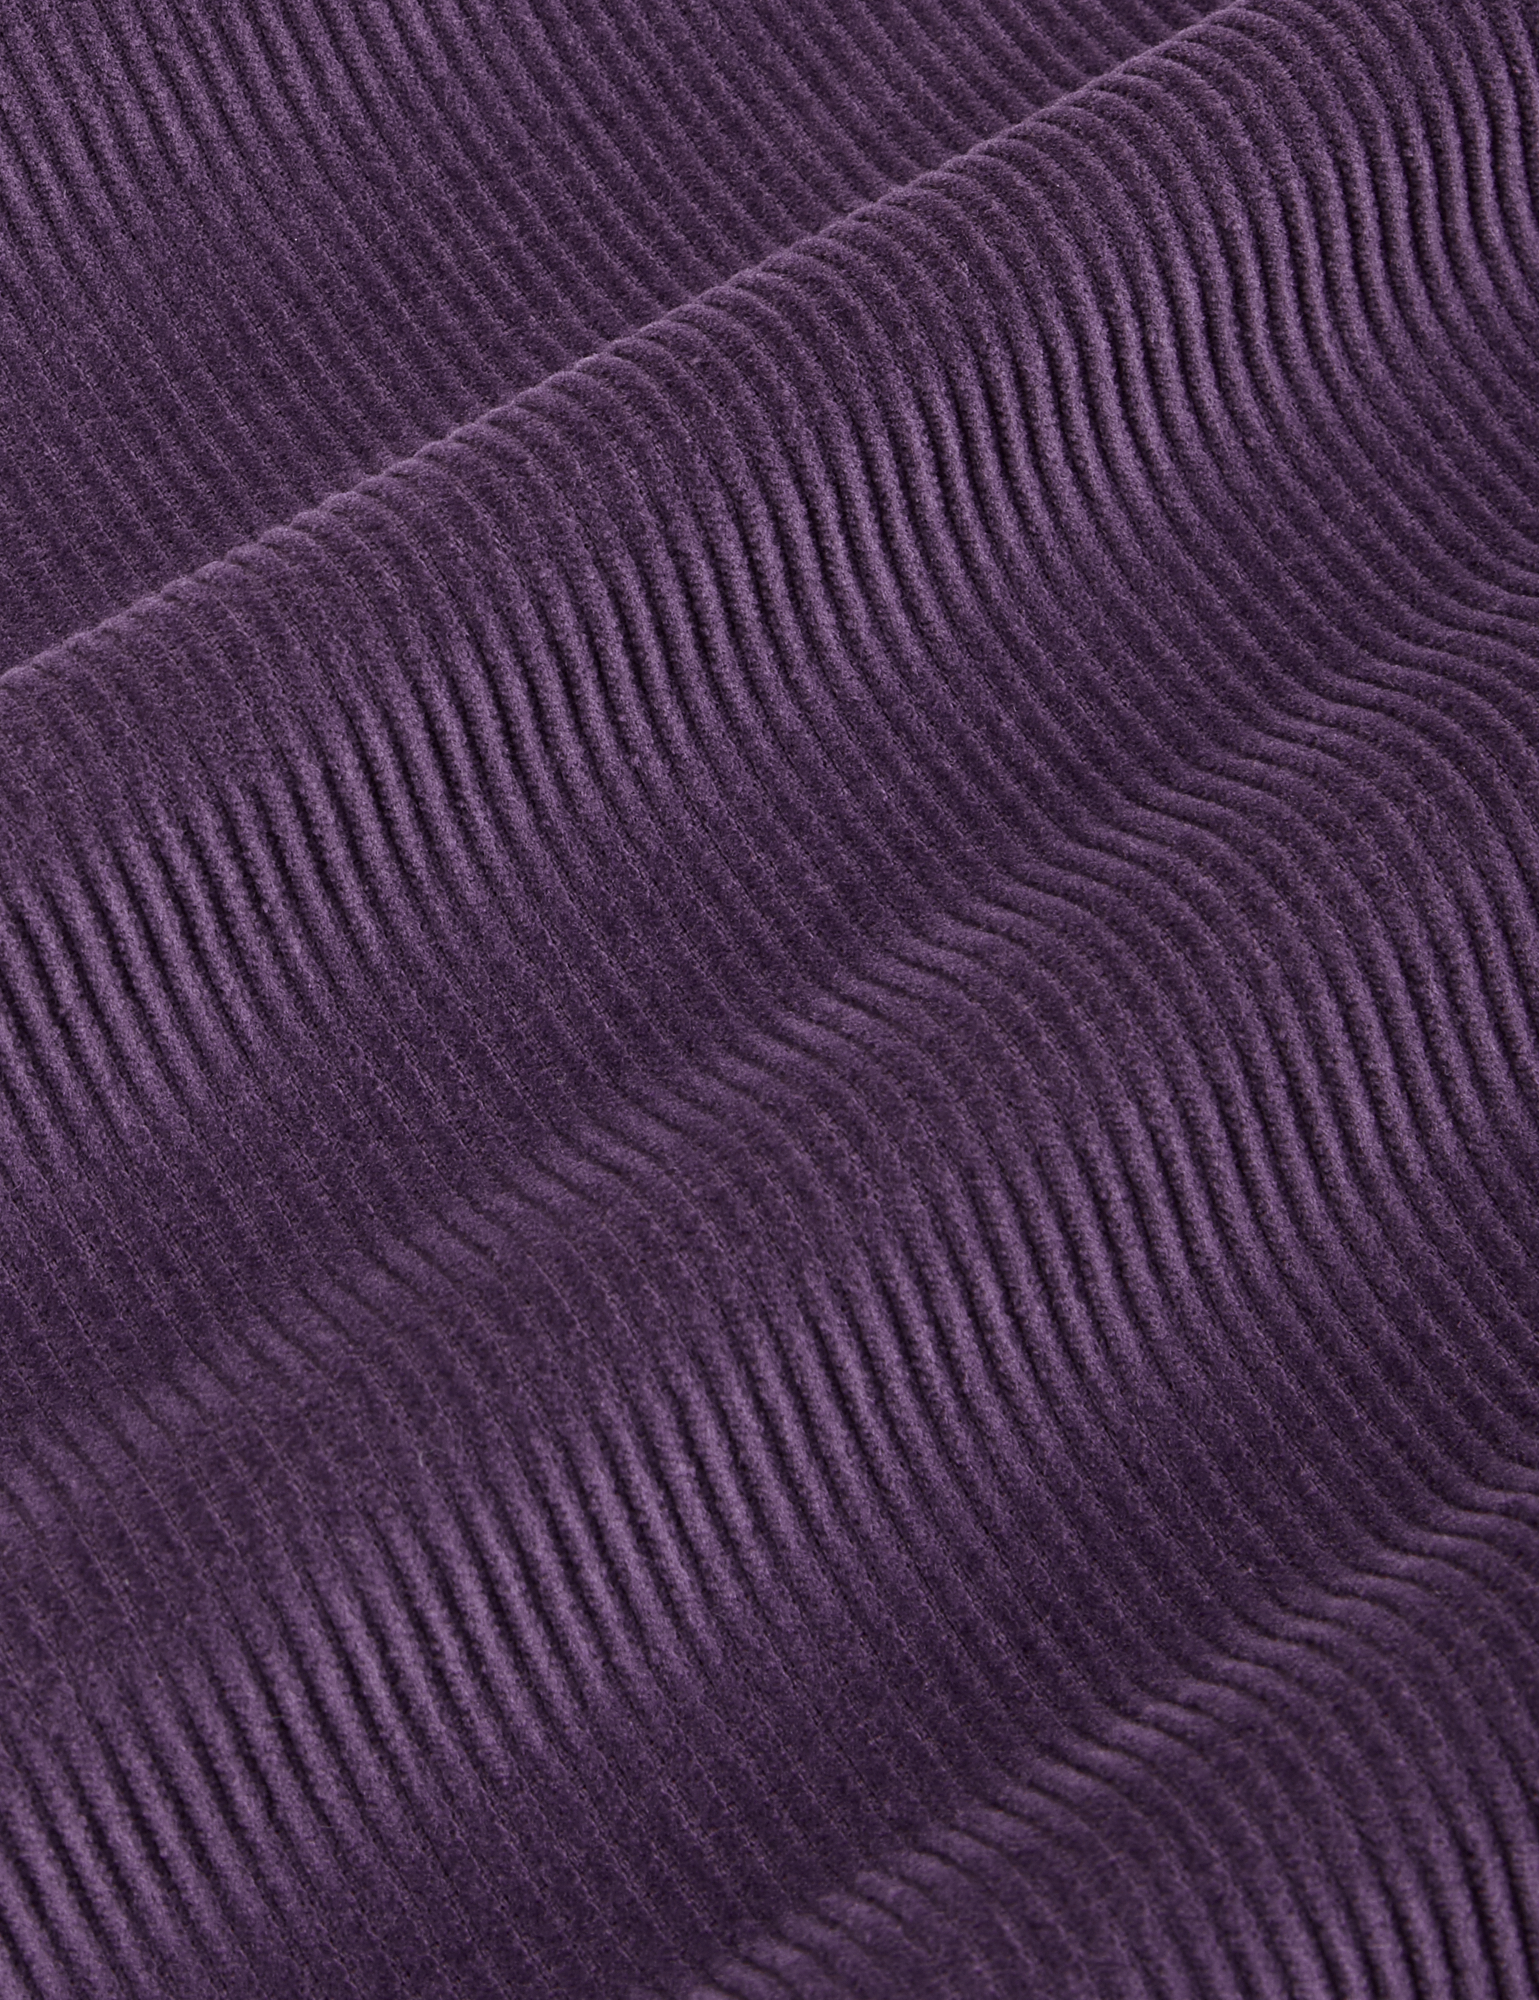 Corduroy Overshirt in Nebula Purple fabric detail close up